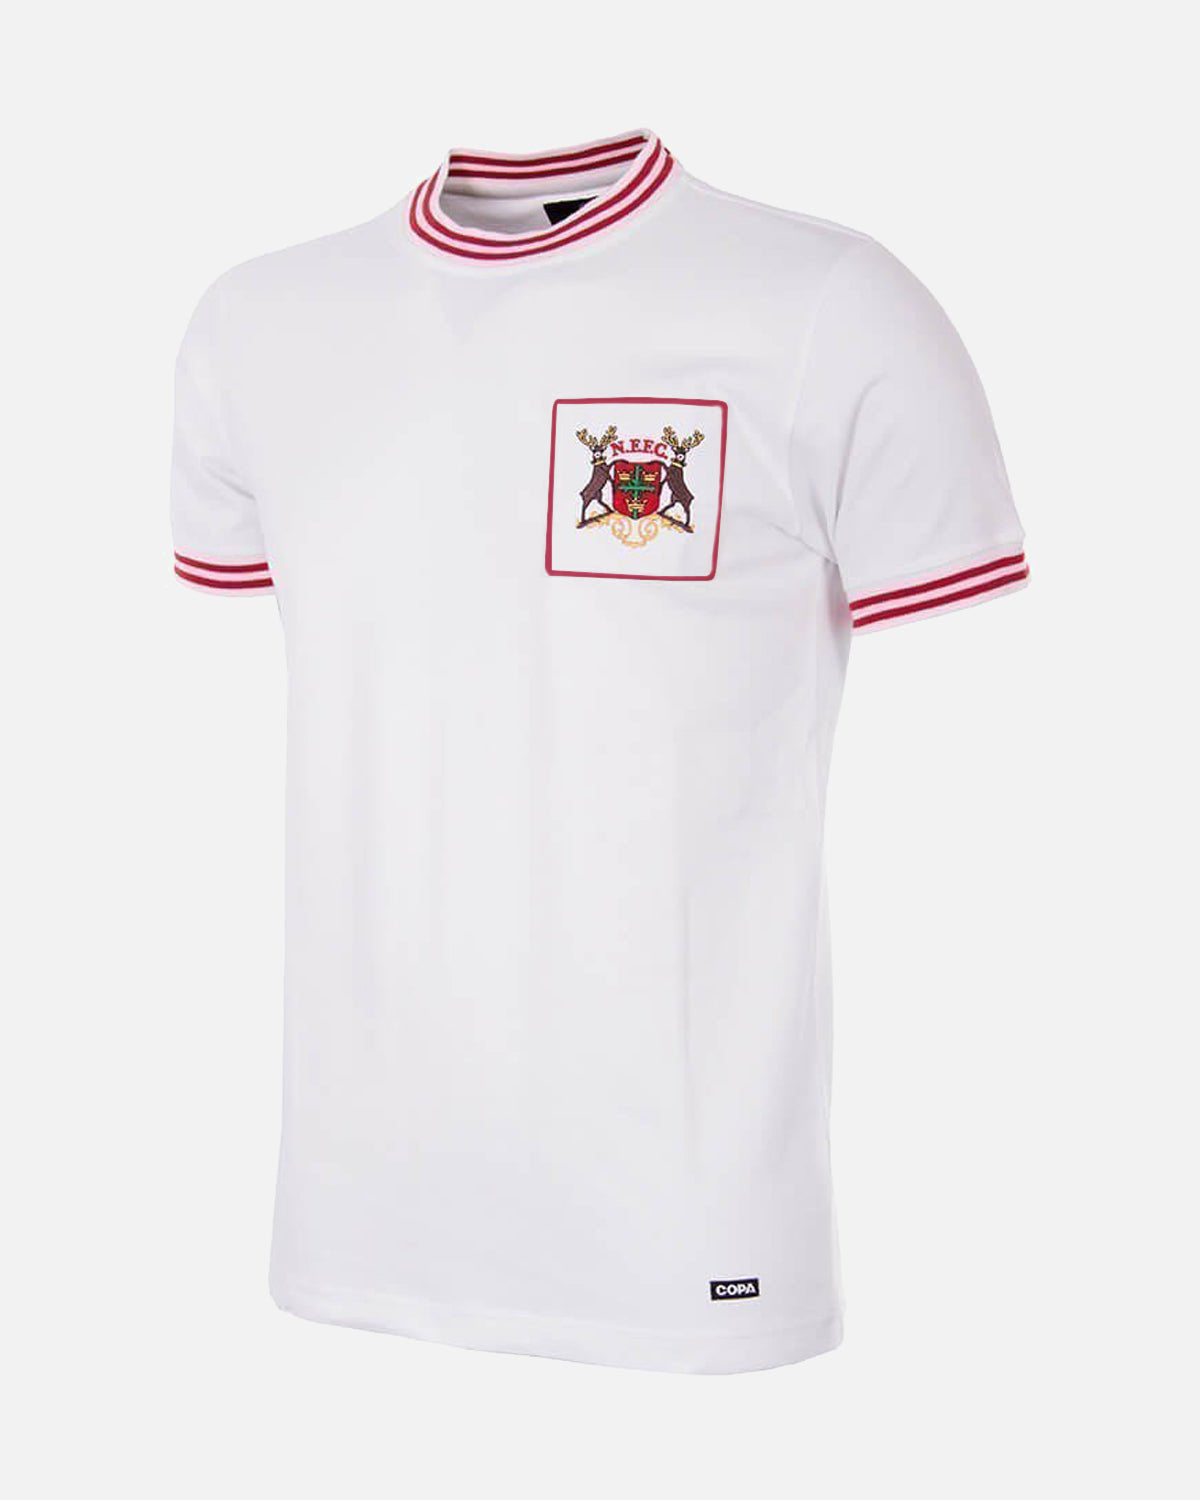 NFFC Retro 1966 Away Shirt